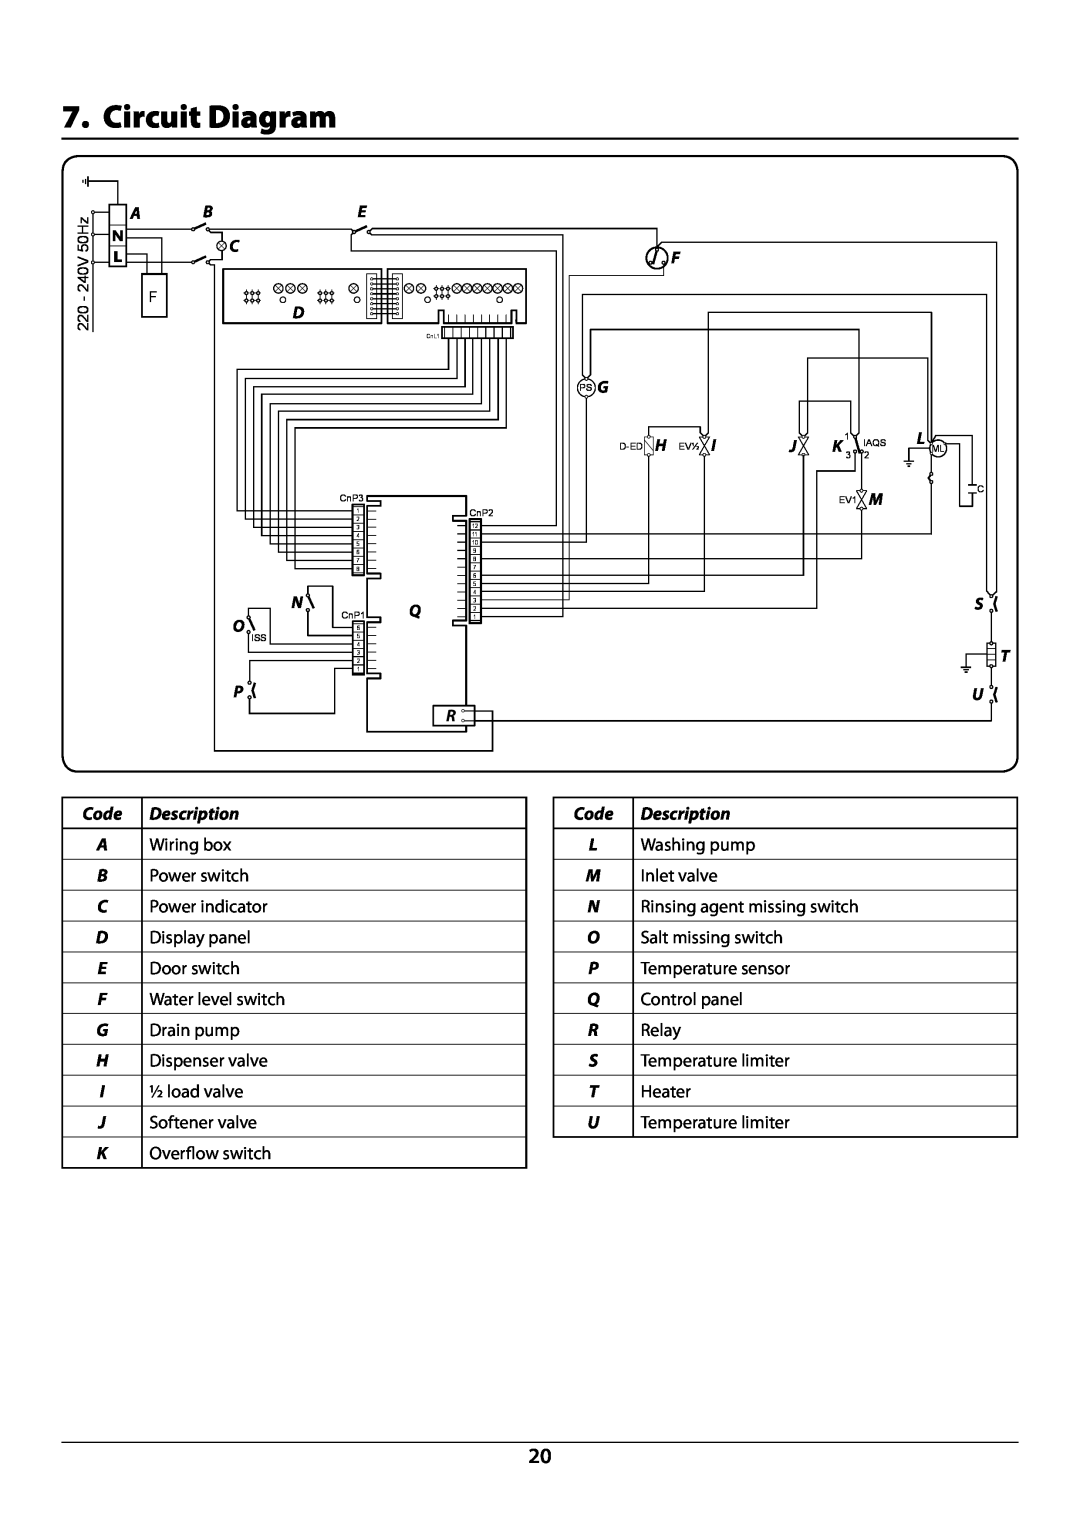 Rangemaster RDW6012FI manual Circuit Diagram, DocNo.800-0701 - Circuit diagram - RDW6012 dishwasher, Code Description 